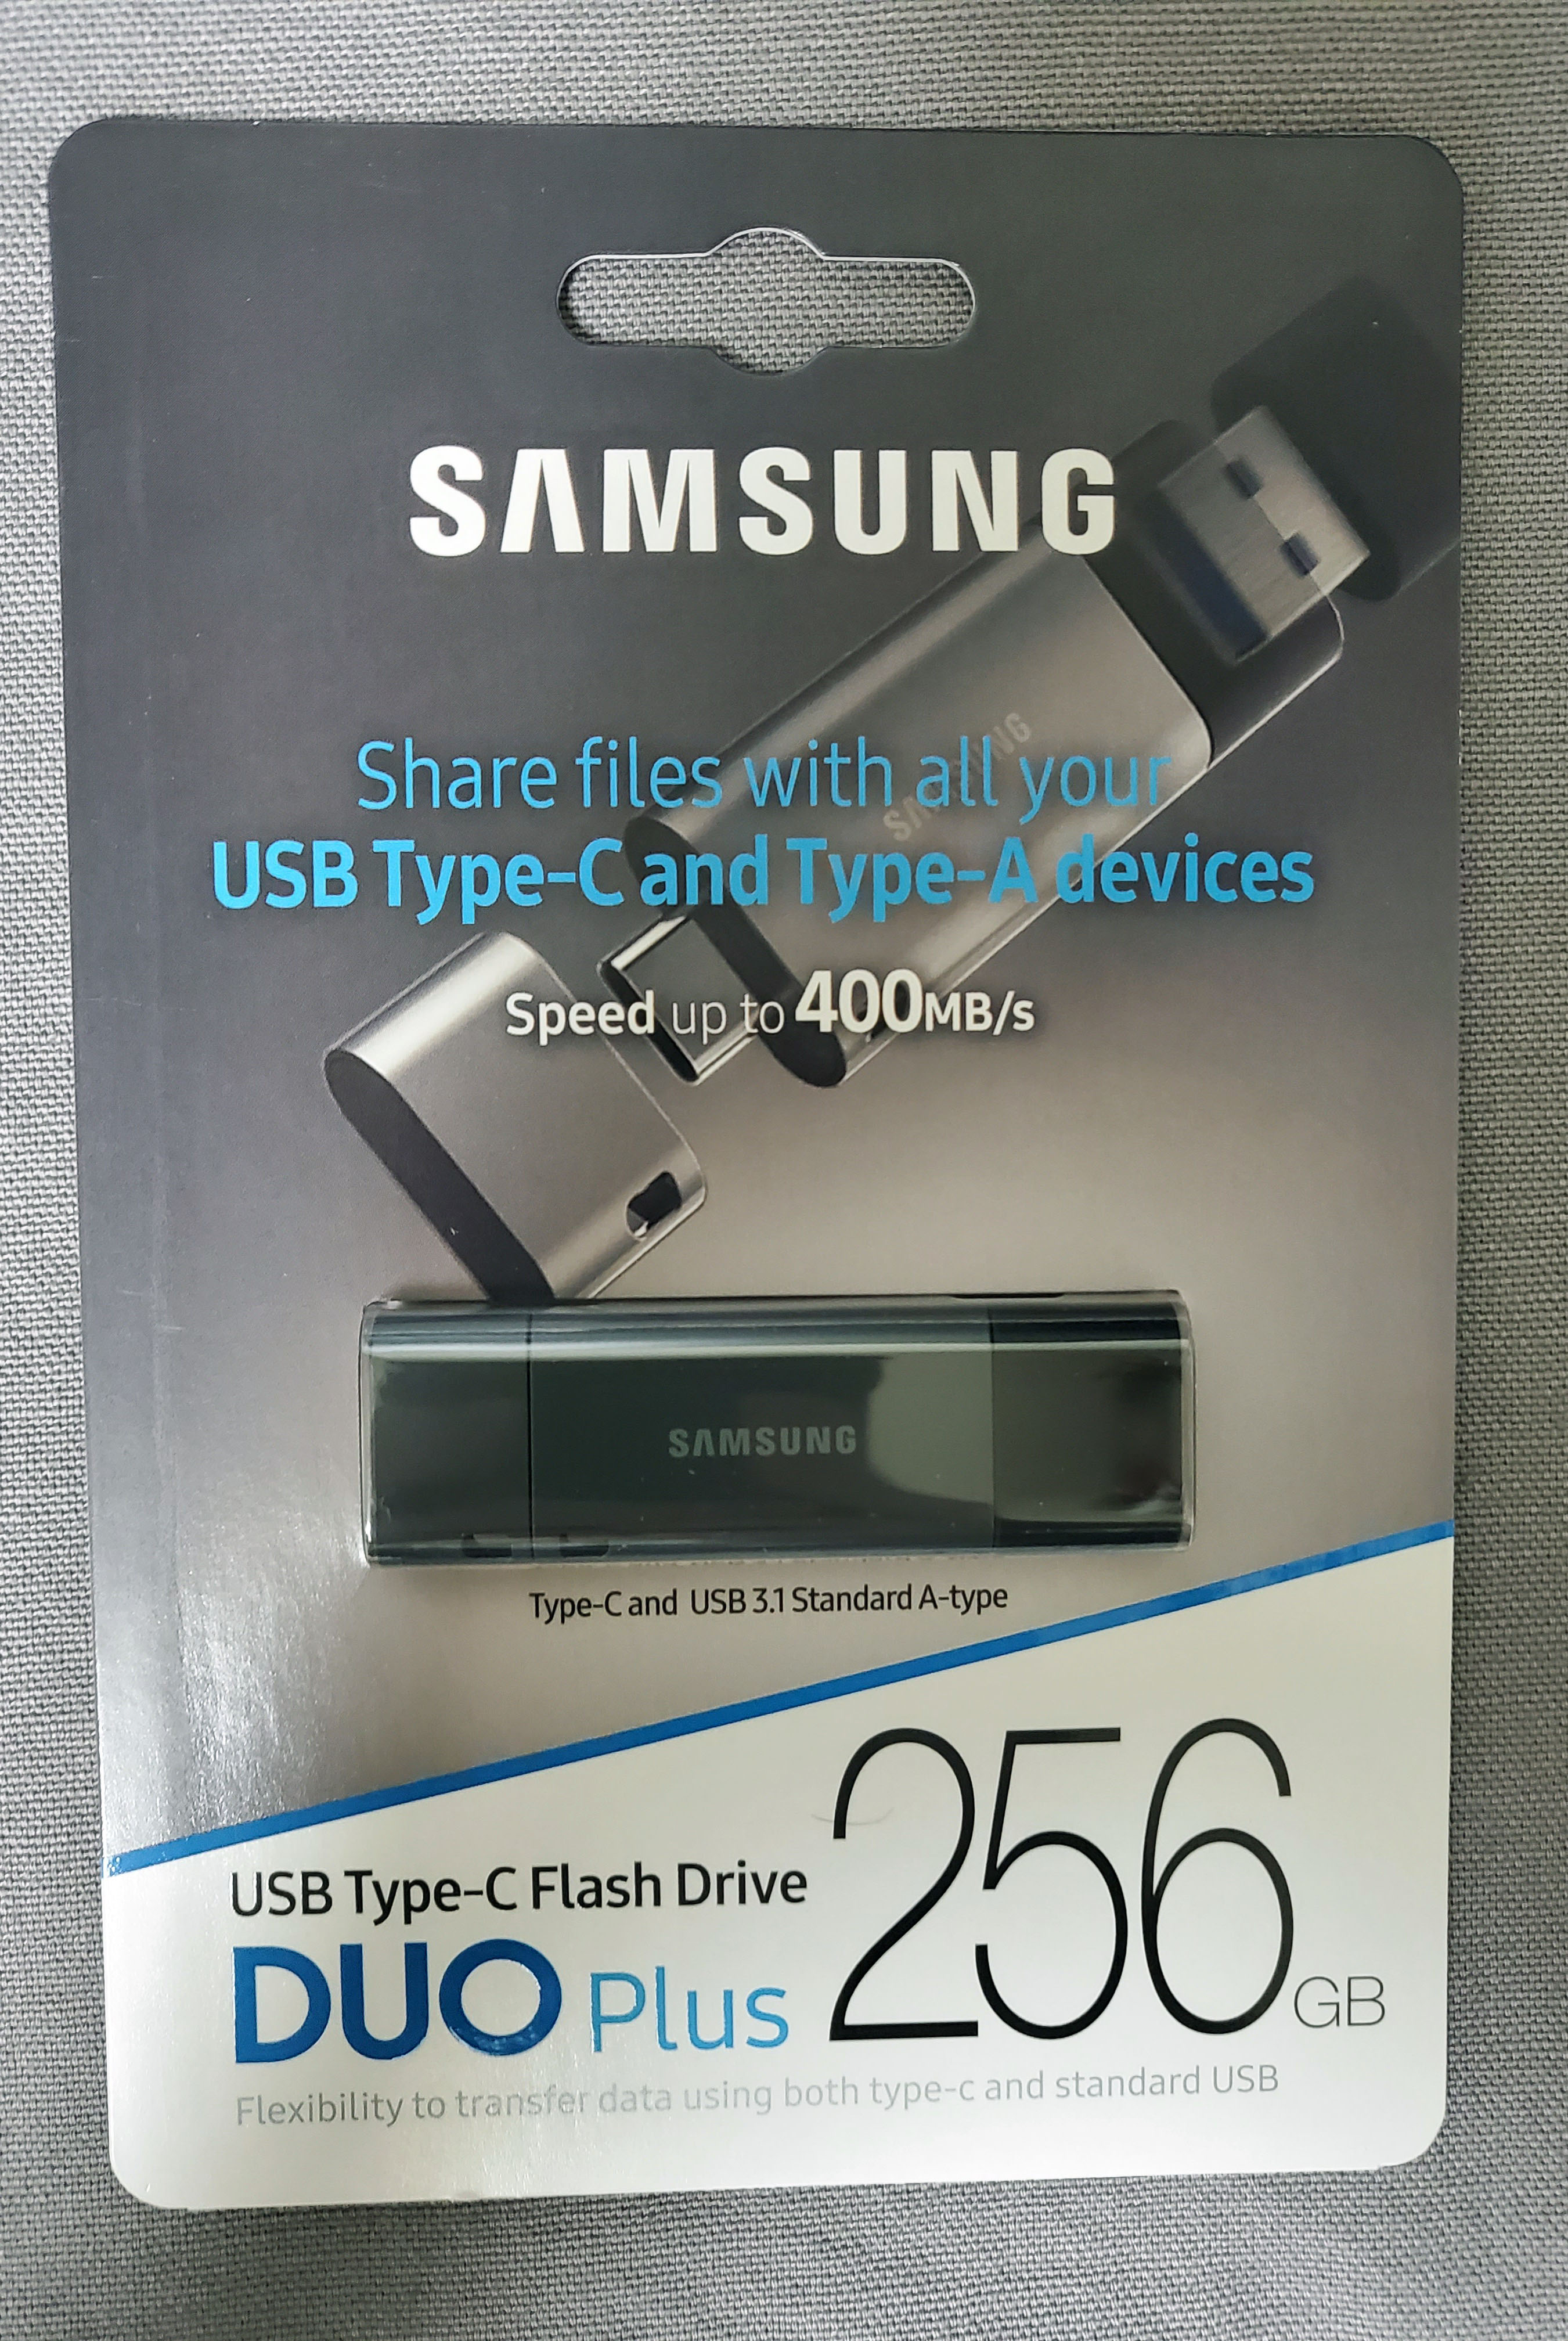 Samsung DUO Plus 256GB (MUF-256DB)